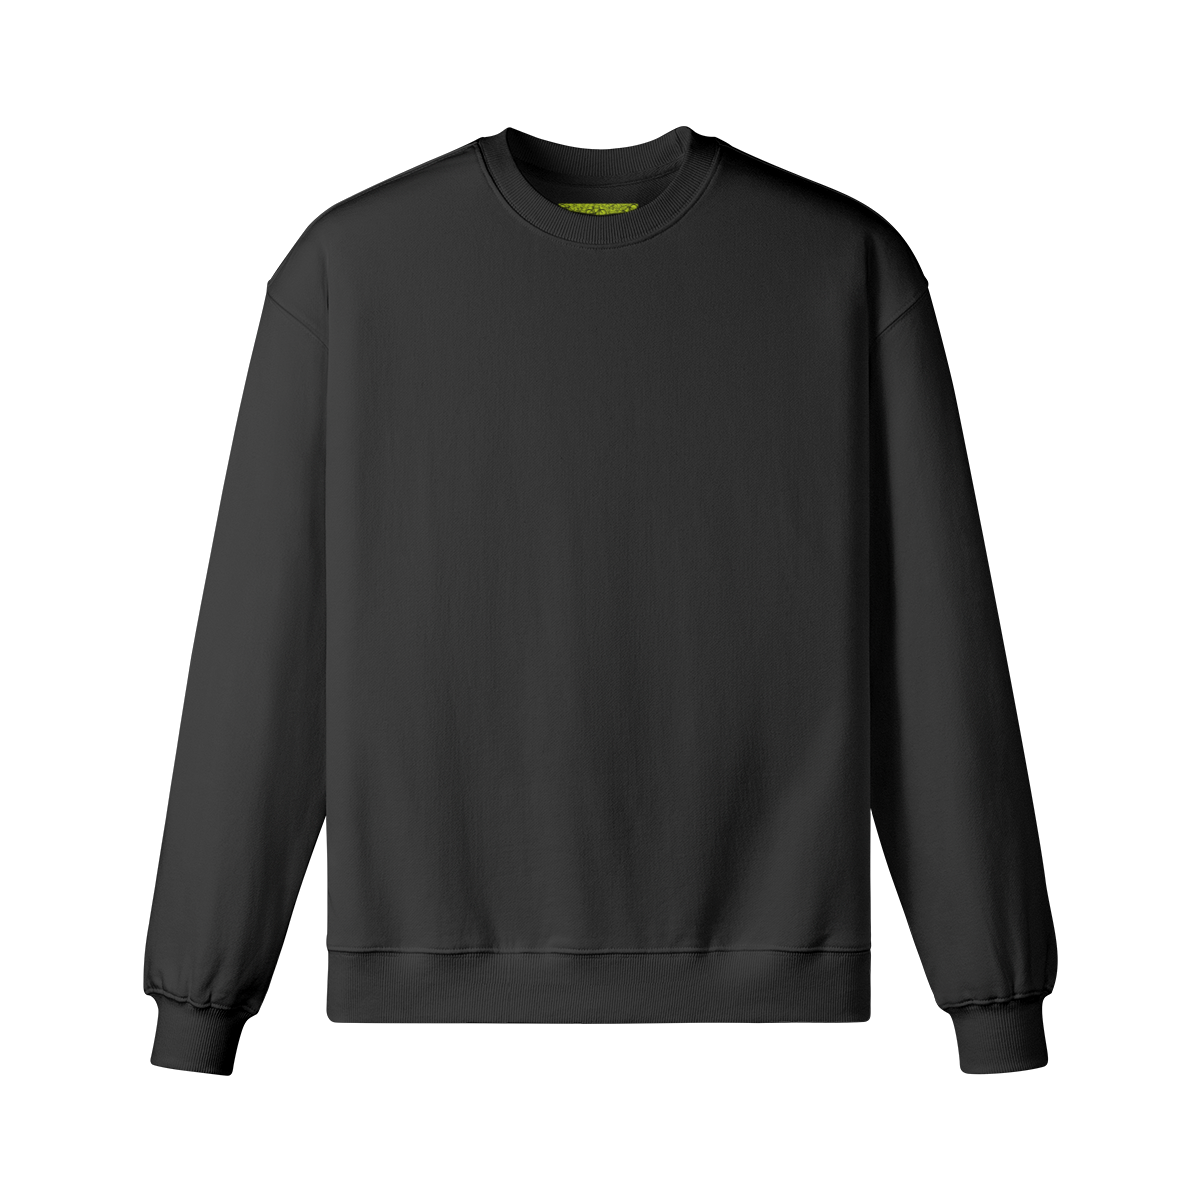 TRIP MONKEY (BACK PRINT) - Unisex Oversized Sweatshirt